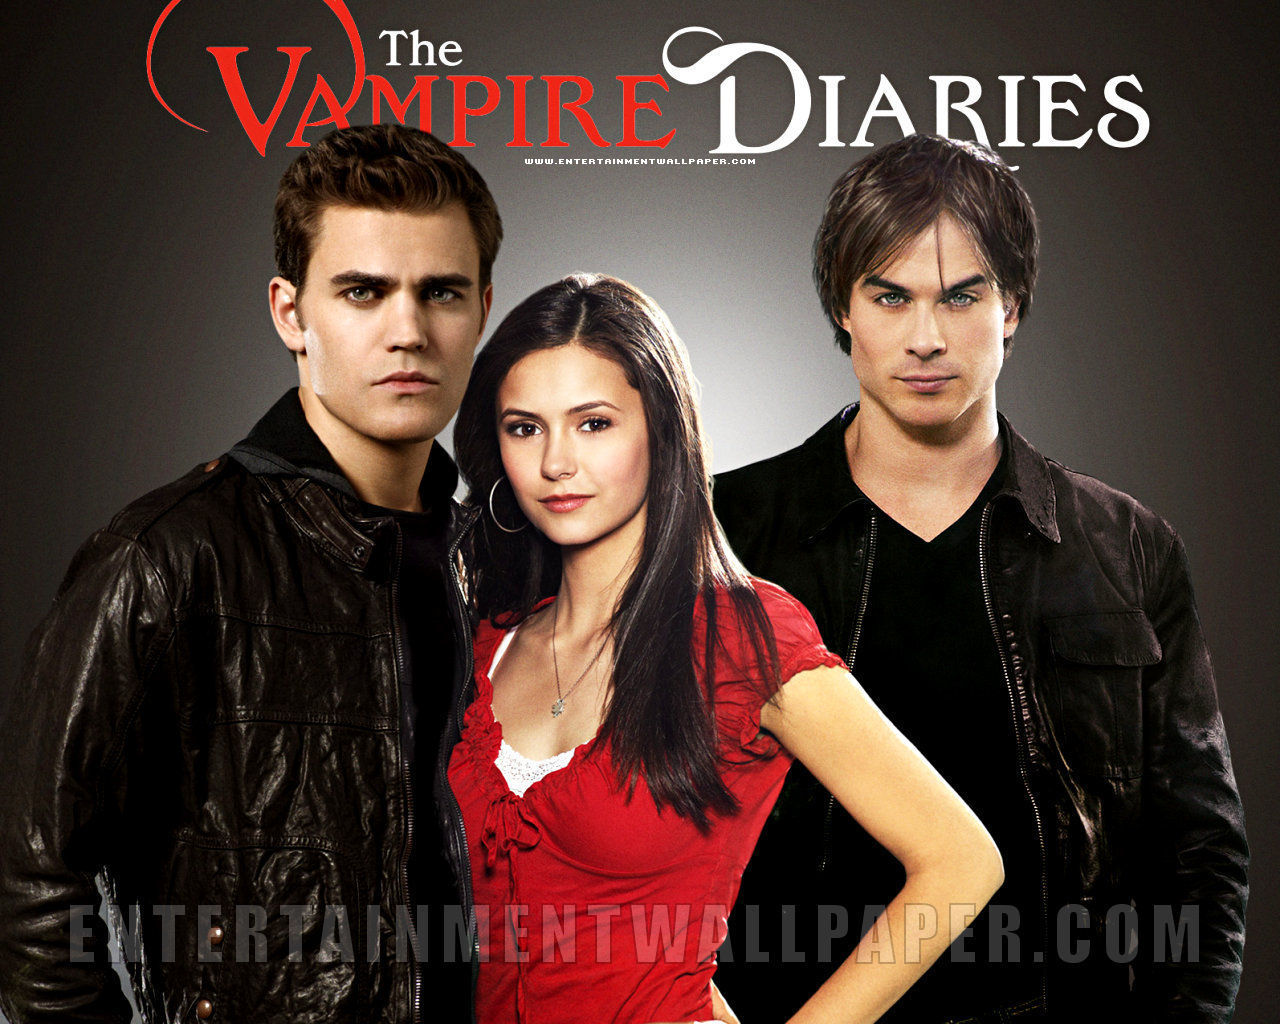 vampire diaries season 1 complete torrent file